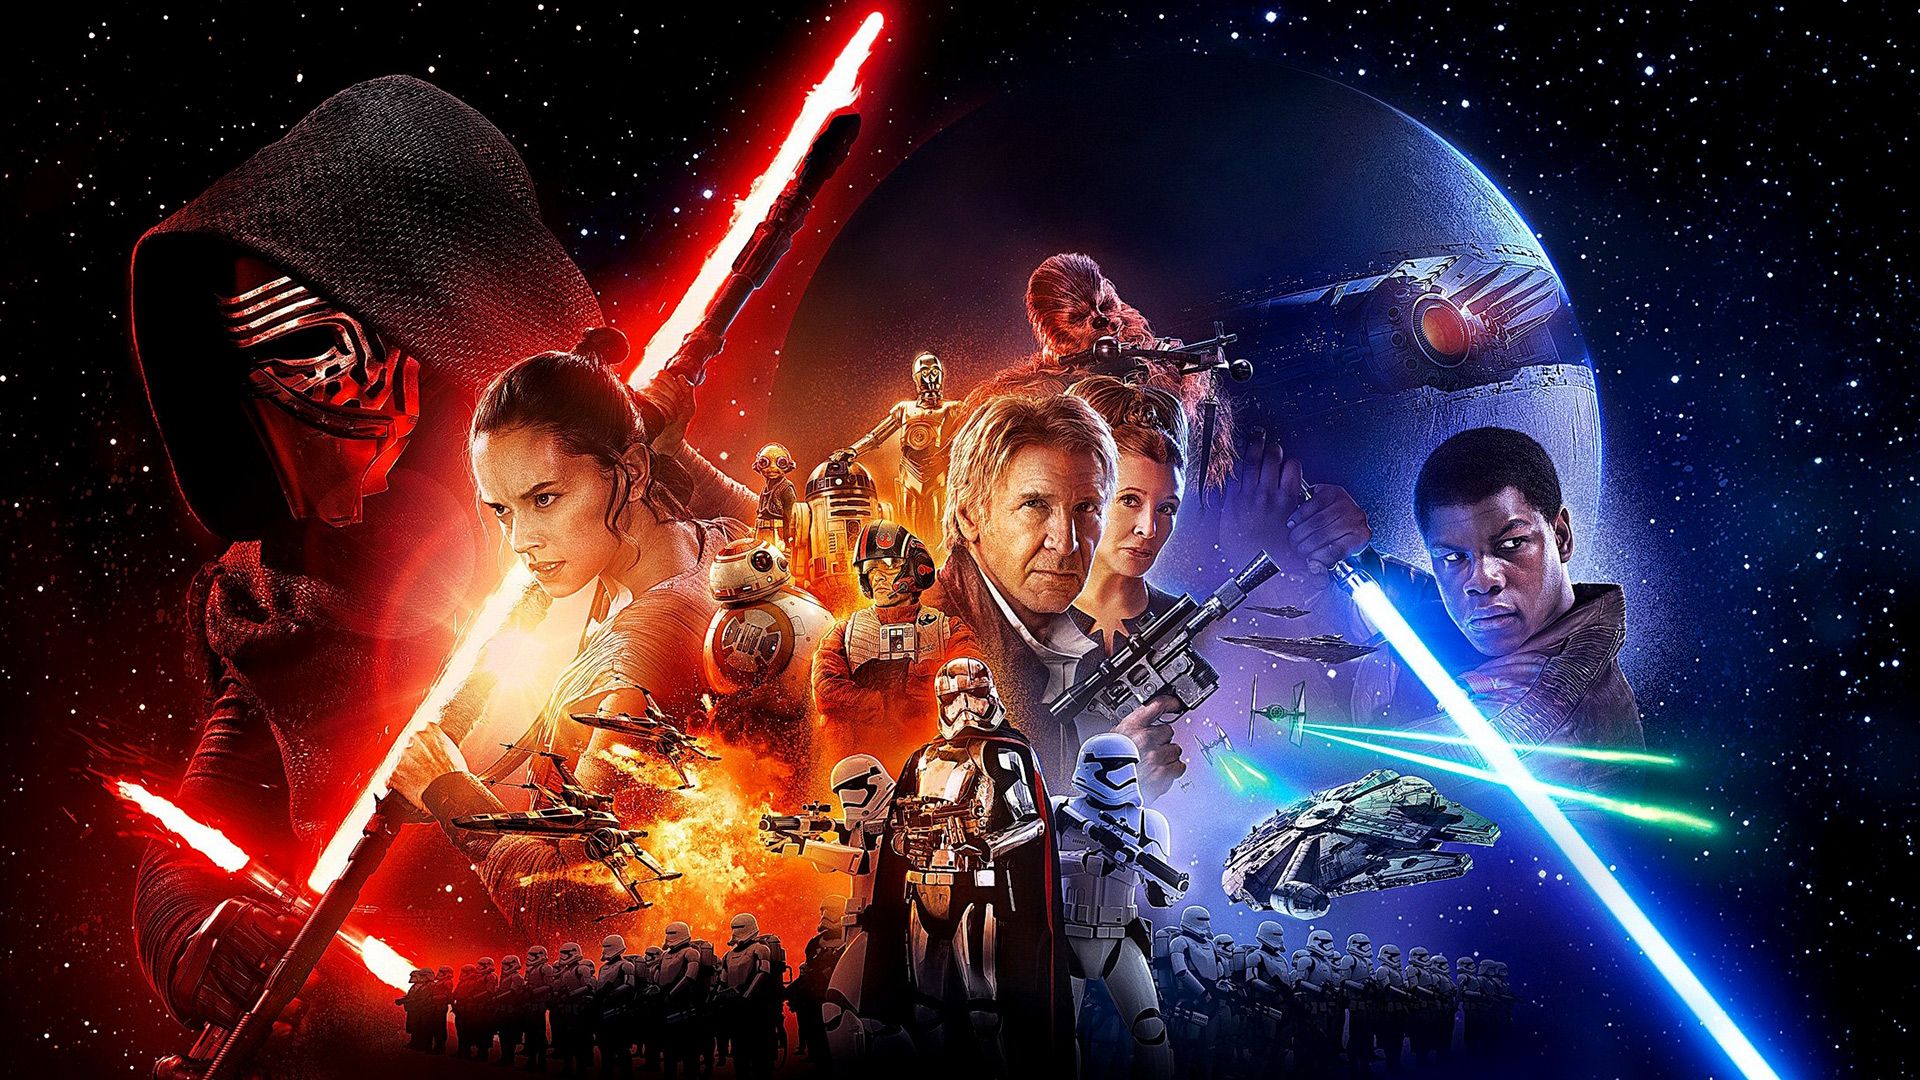 Star Wars: Episode VII - The Force Awakens background